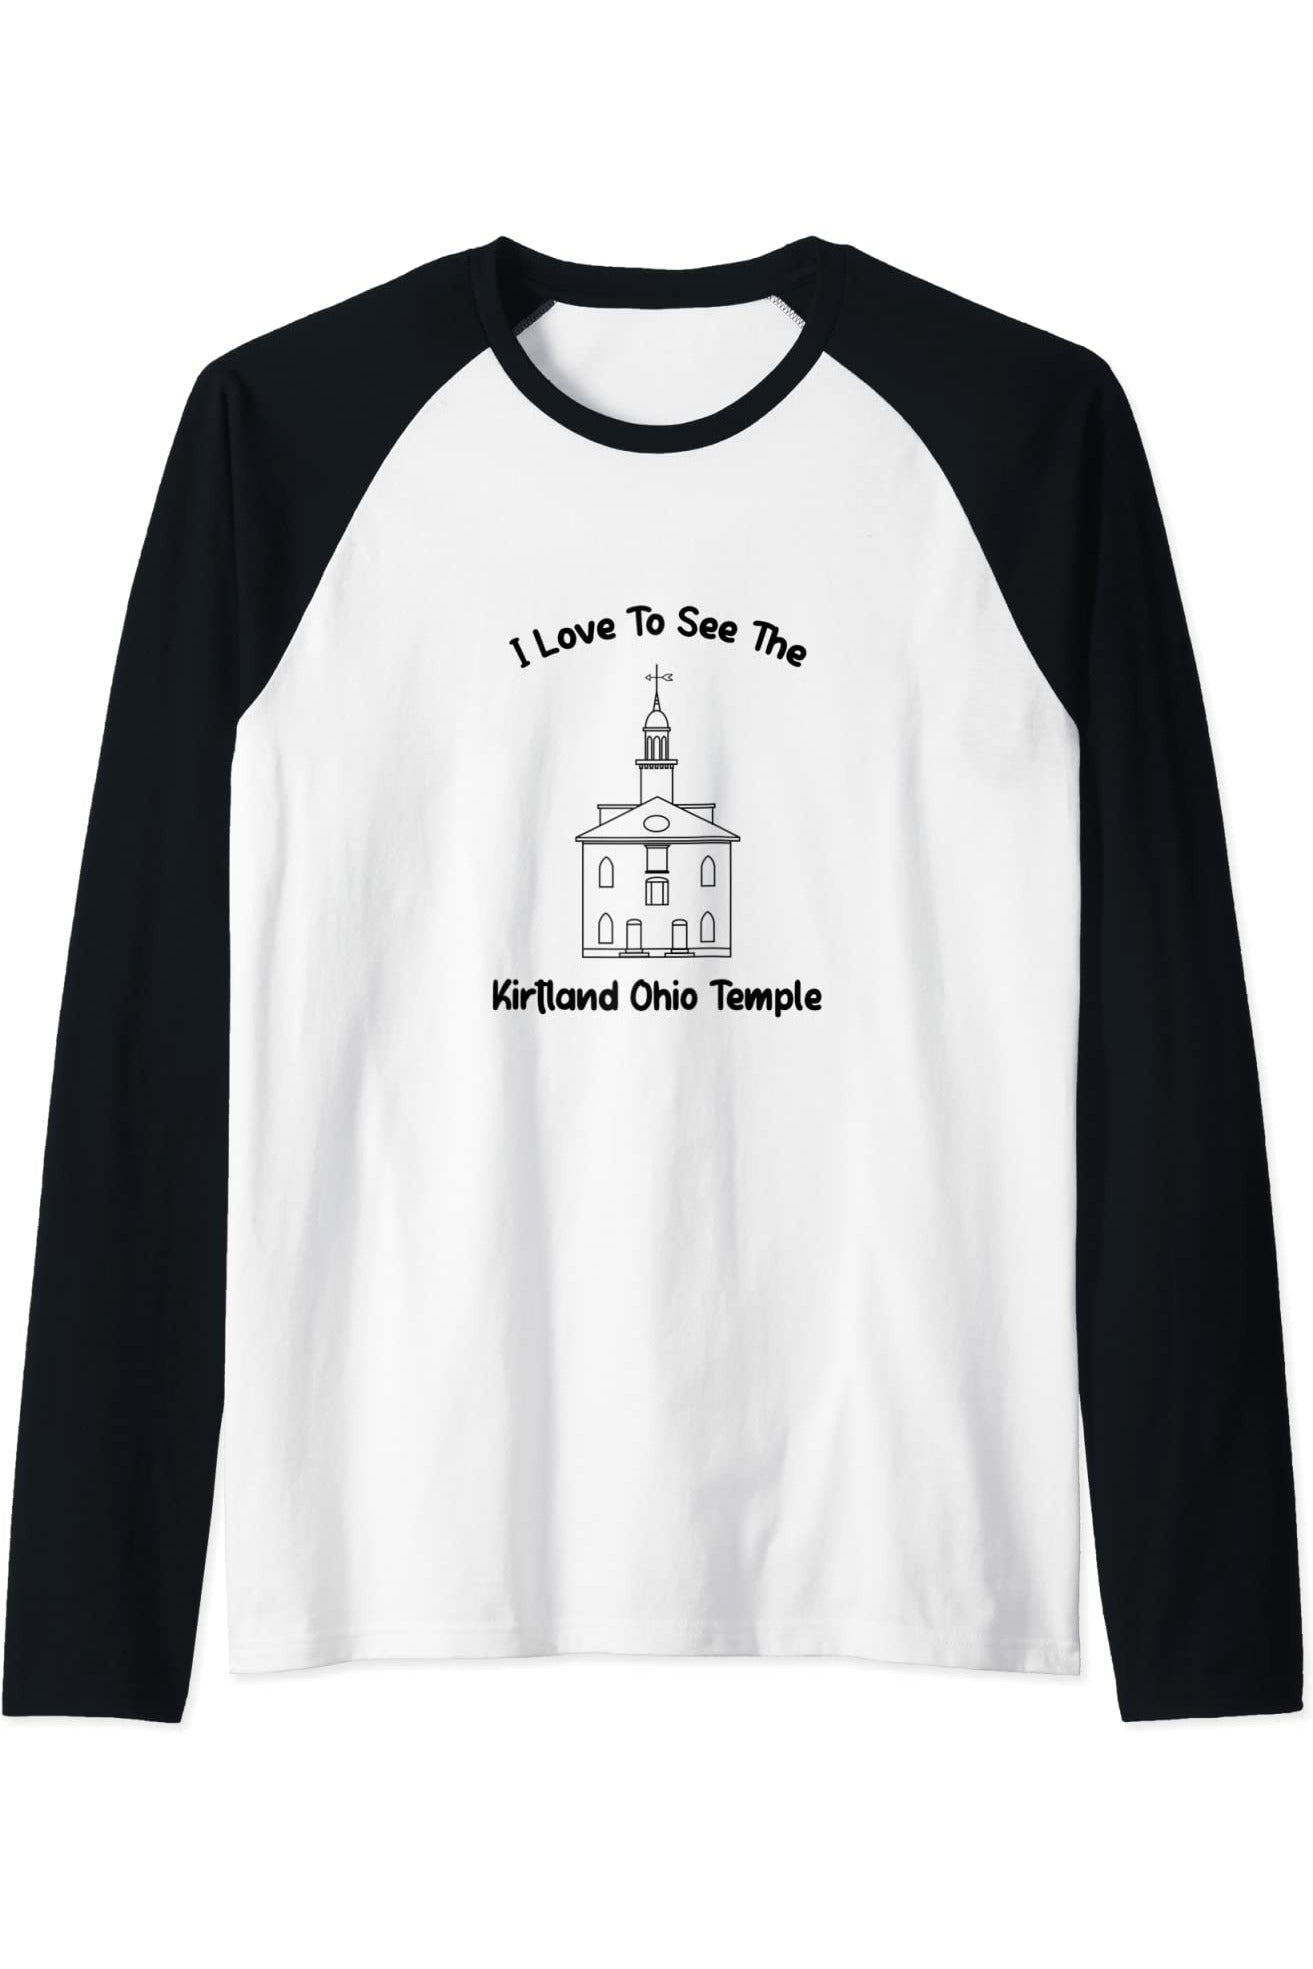 Kirtland Ohio Temple Raglan - Primary Style (English) US